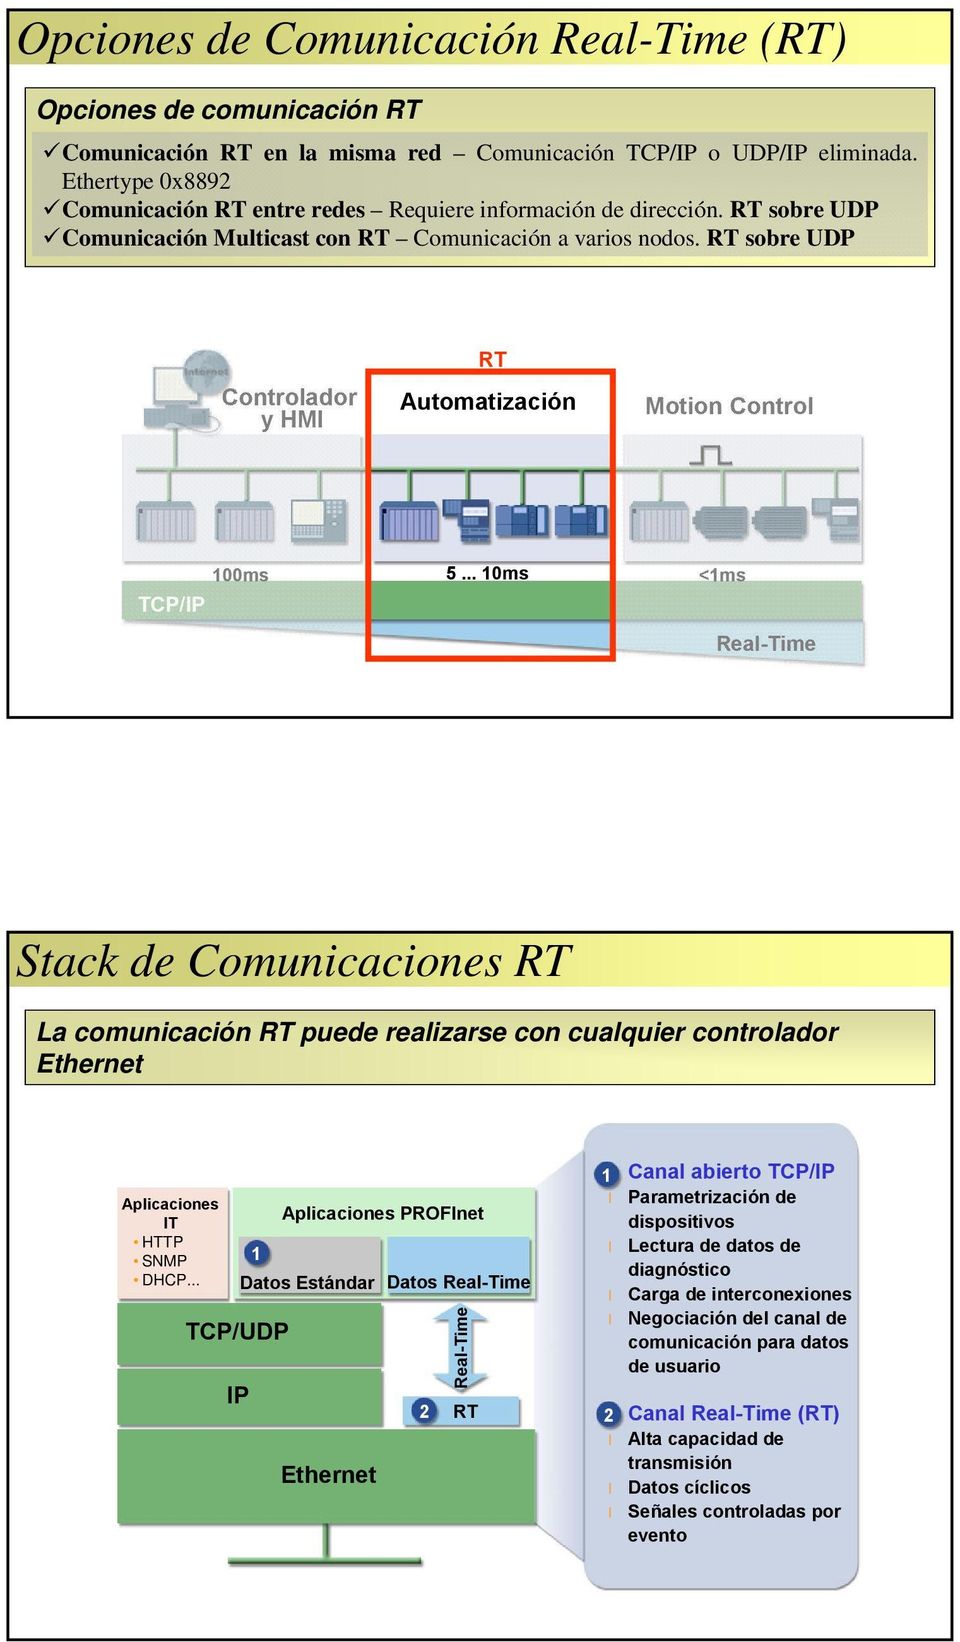 RT sobre UDP Controlador y HMI RT Automatización Motion Control TCP/IP 100ms 5.